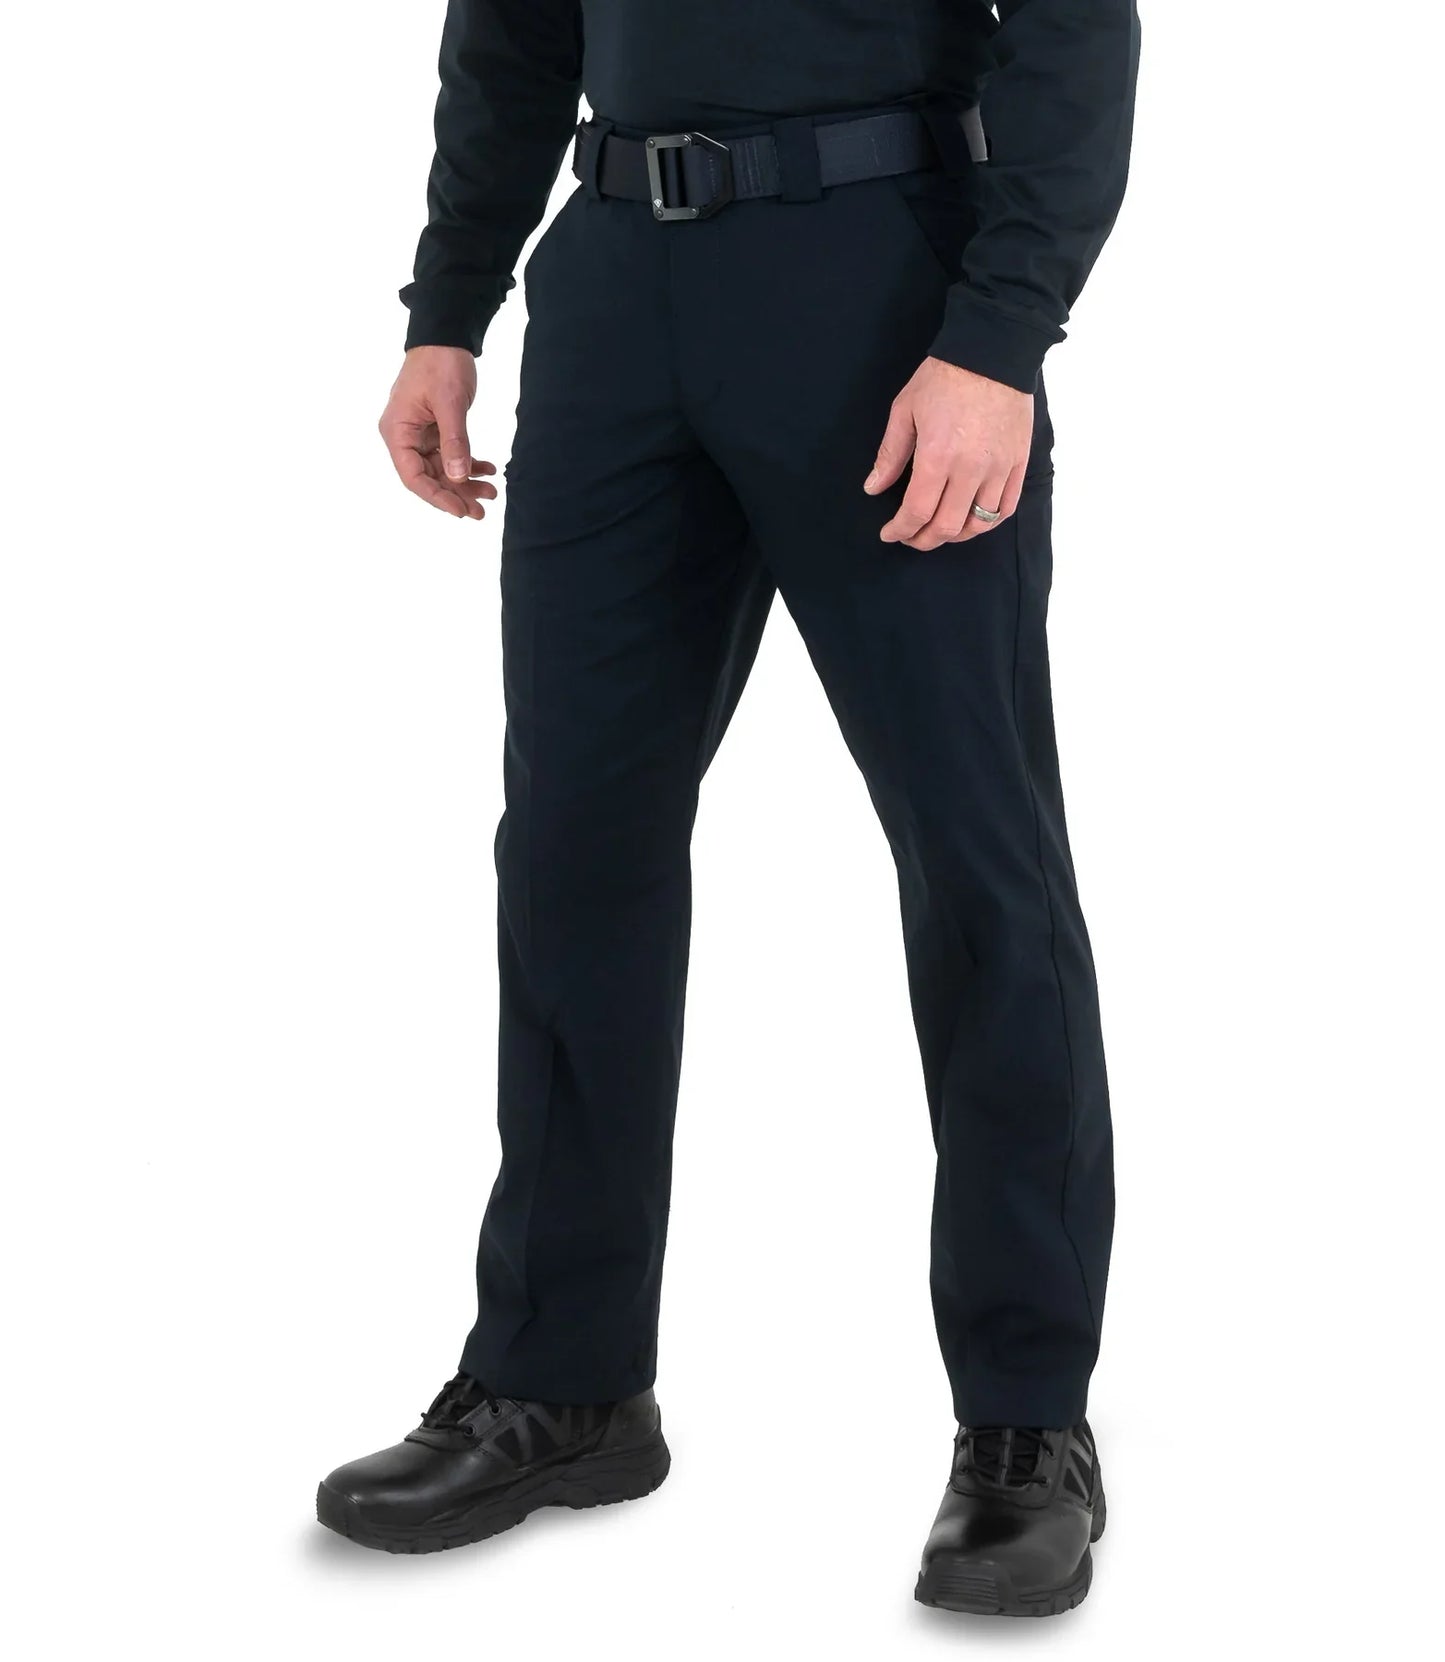 First Tactical Men's V2 Pro Duty 6 Pocket Pant - Midnight Blue